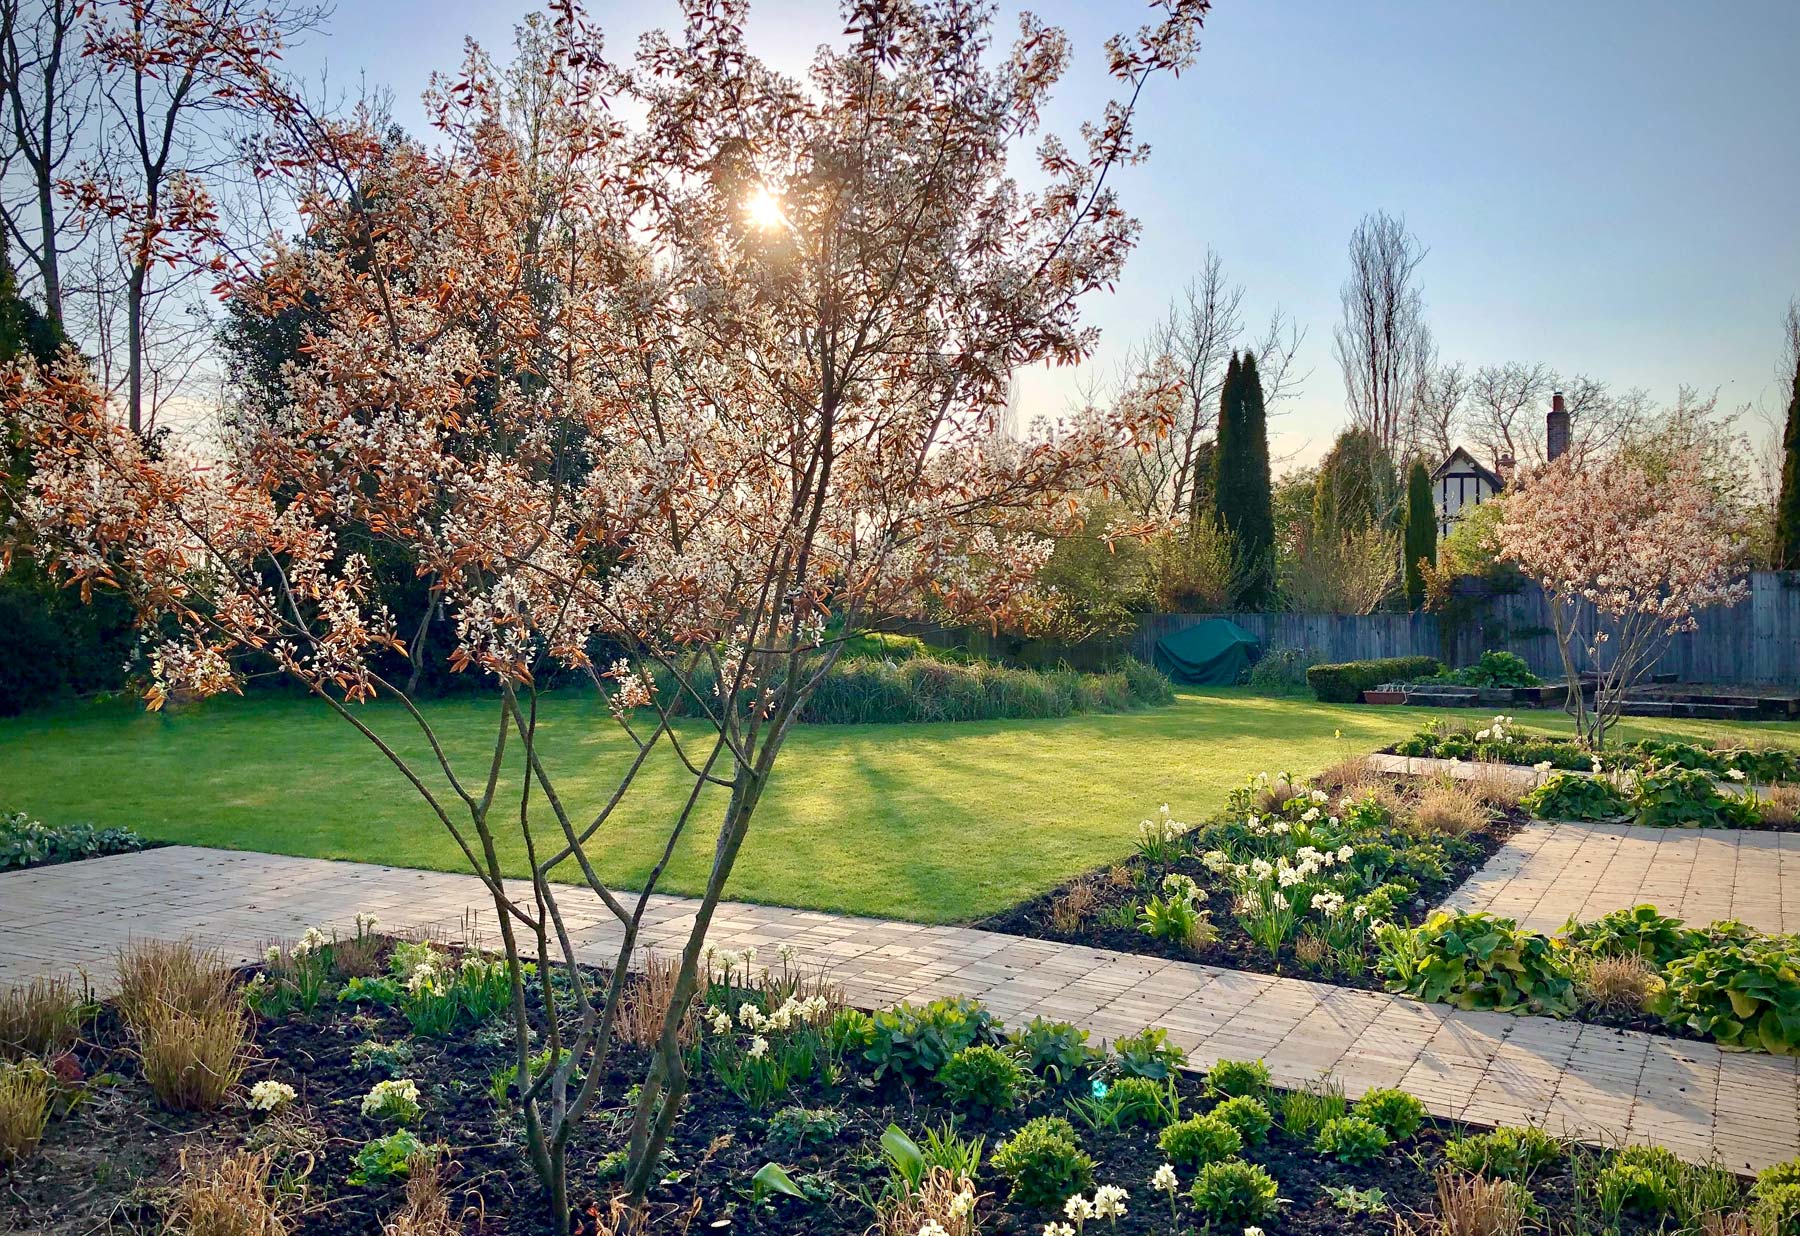 Colm Joseph Gardens Suffolk garden design blossom amelanchier lamarckii multi-stem trees spring bulbs lawn